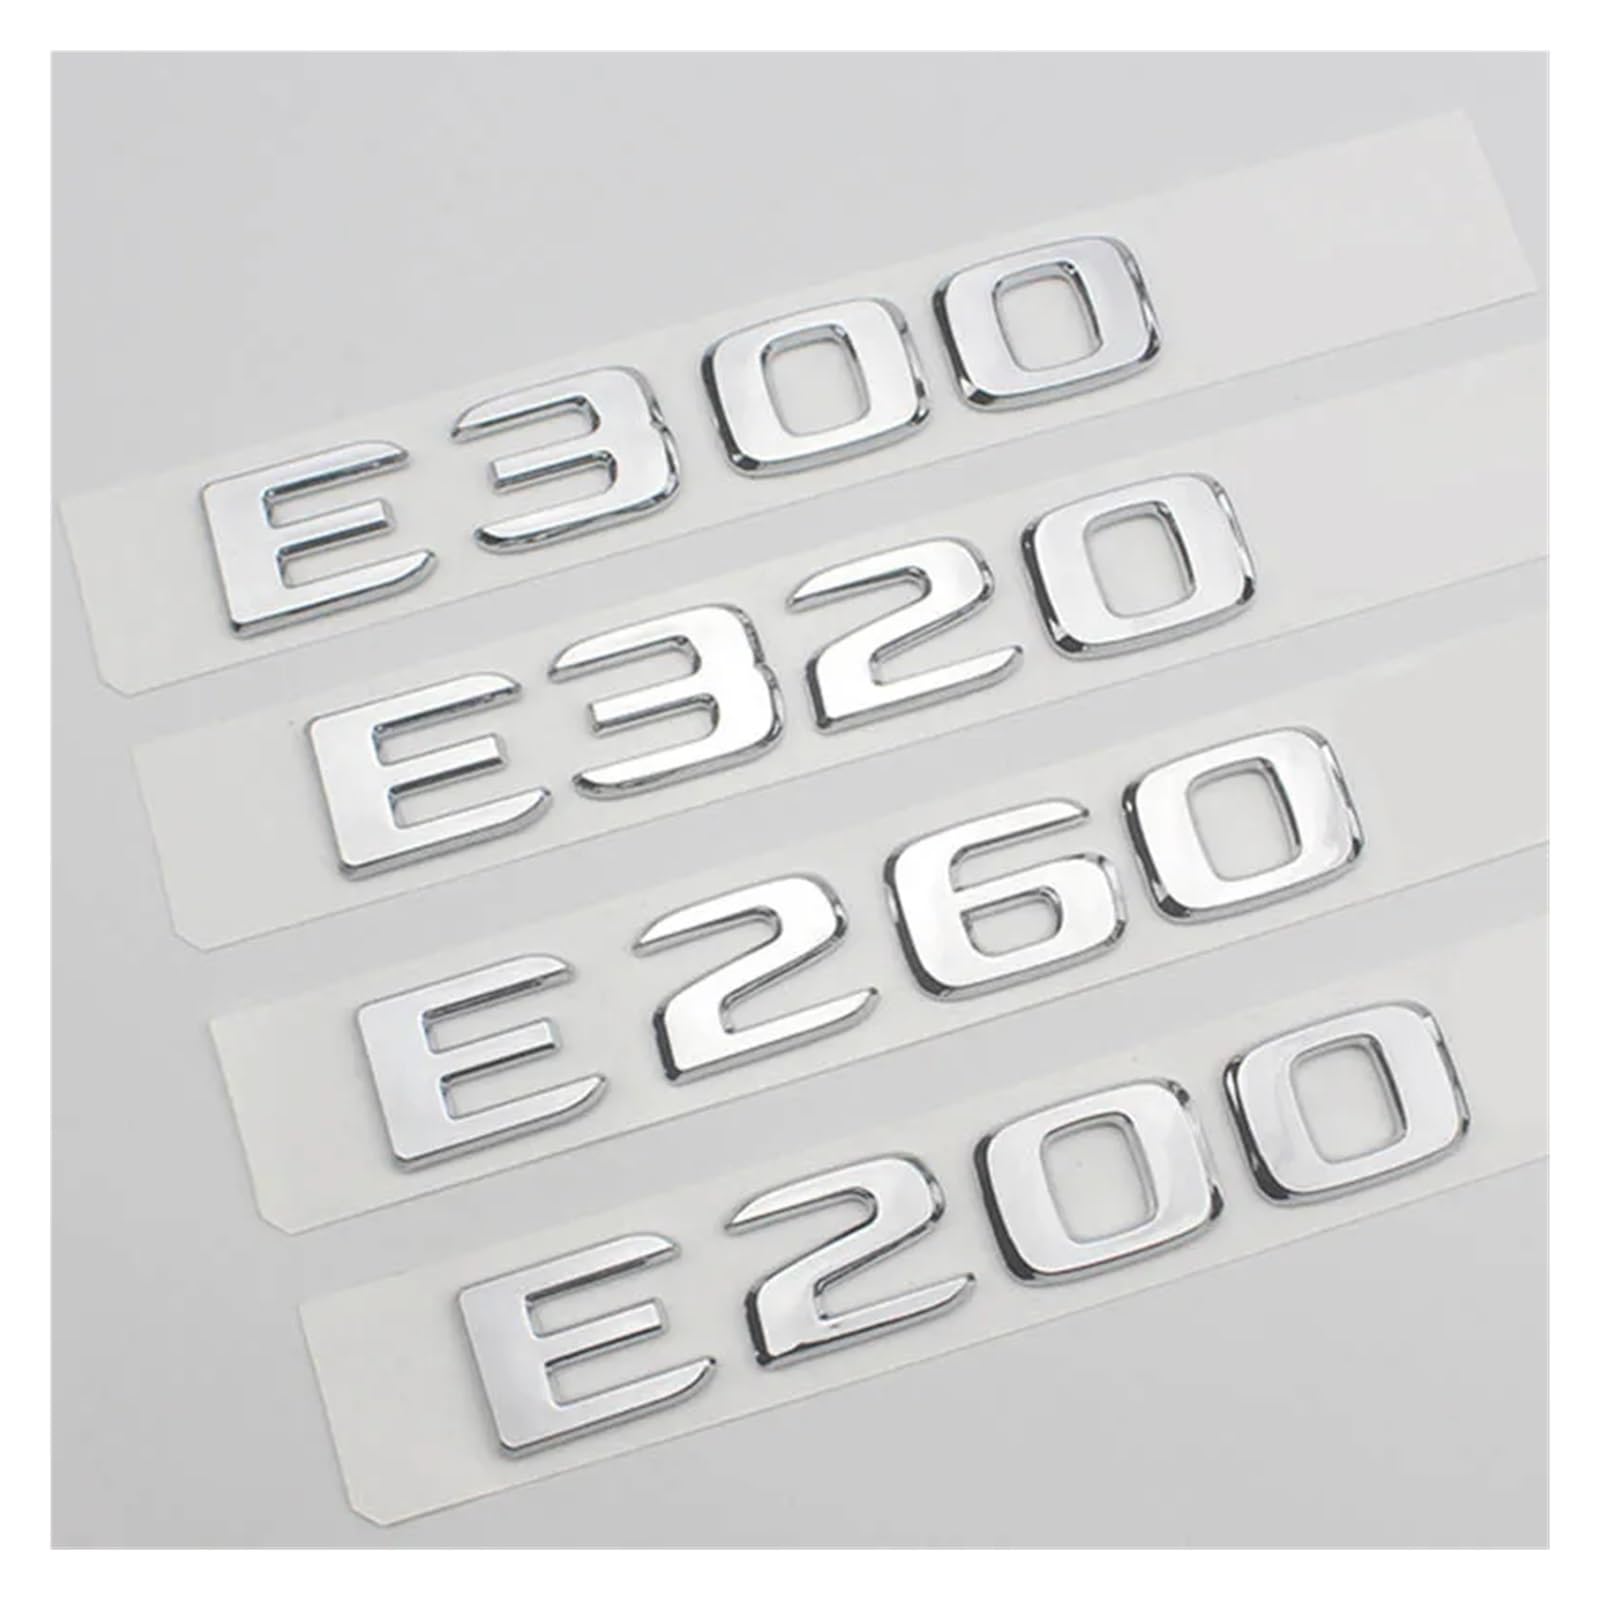 GerRit 3D ABS Chrom Auto Kofferraum Abzeichen Aufkleber Emblem E200 E260 E300 E320 Logo kompatibel mit E 200 260 300 320 W212 W213 W211 (Farbe: Chrom, Größe: E320) von GerRit